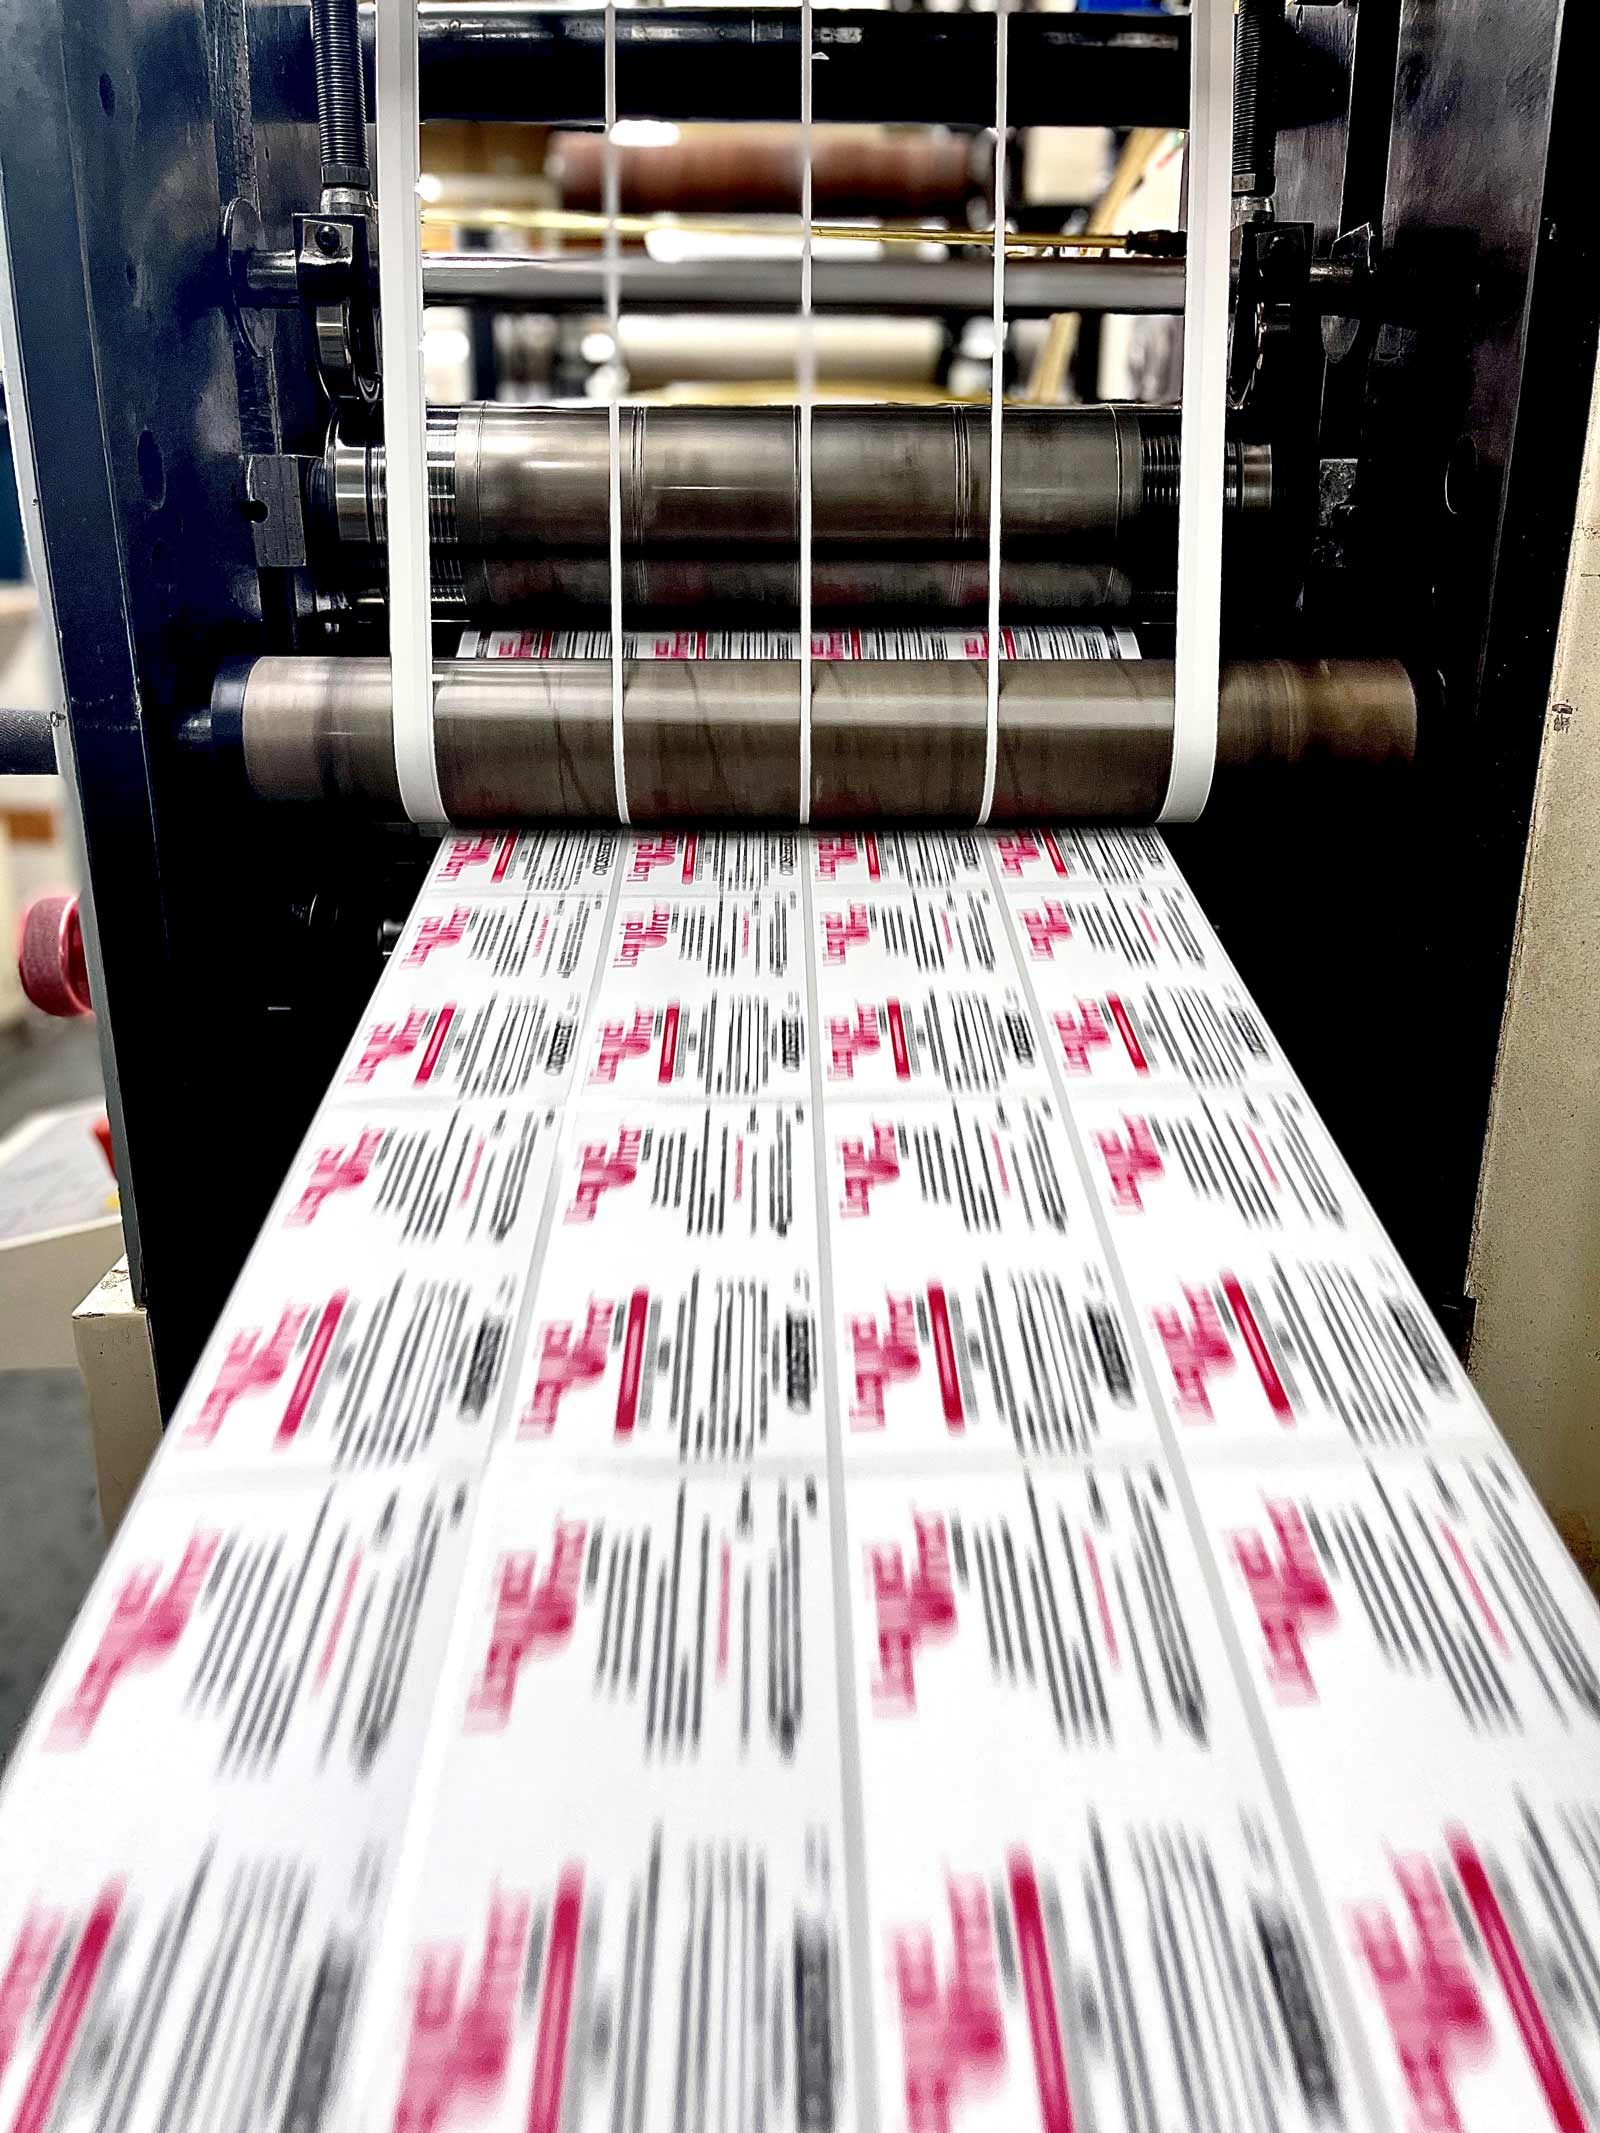 Label printing process at Niagara Label